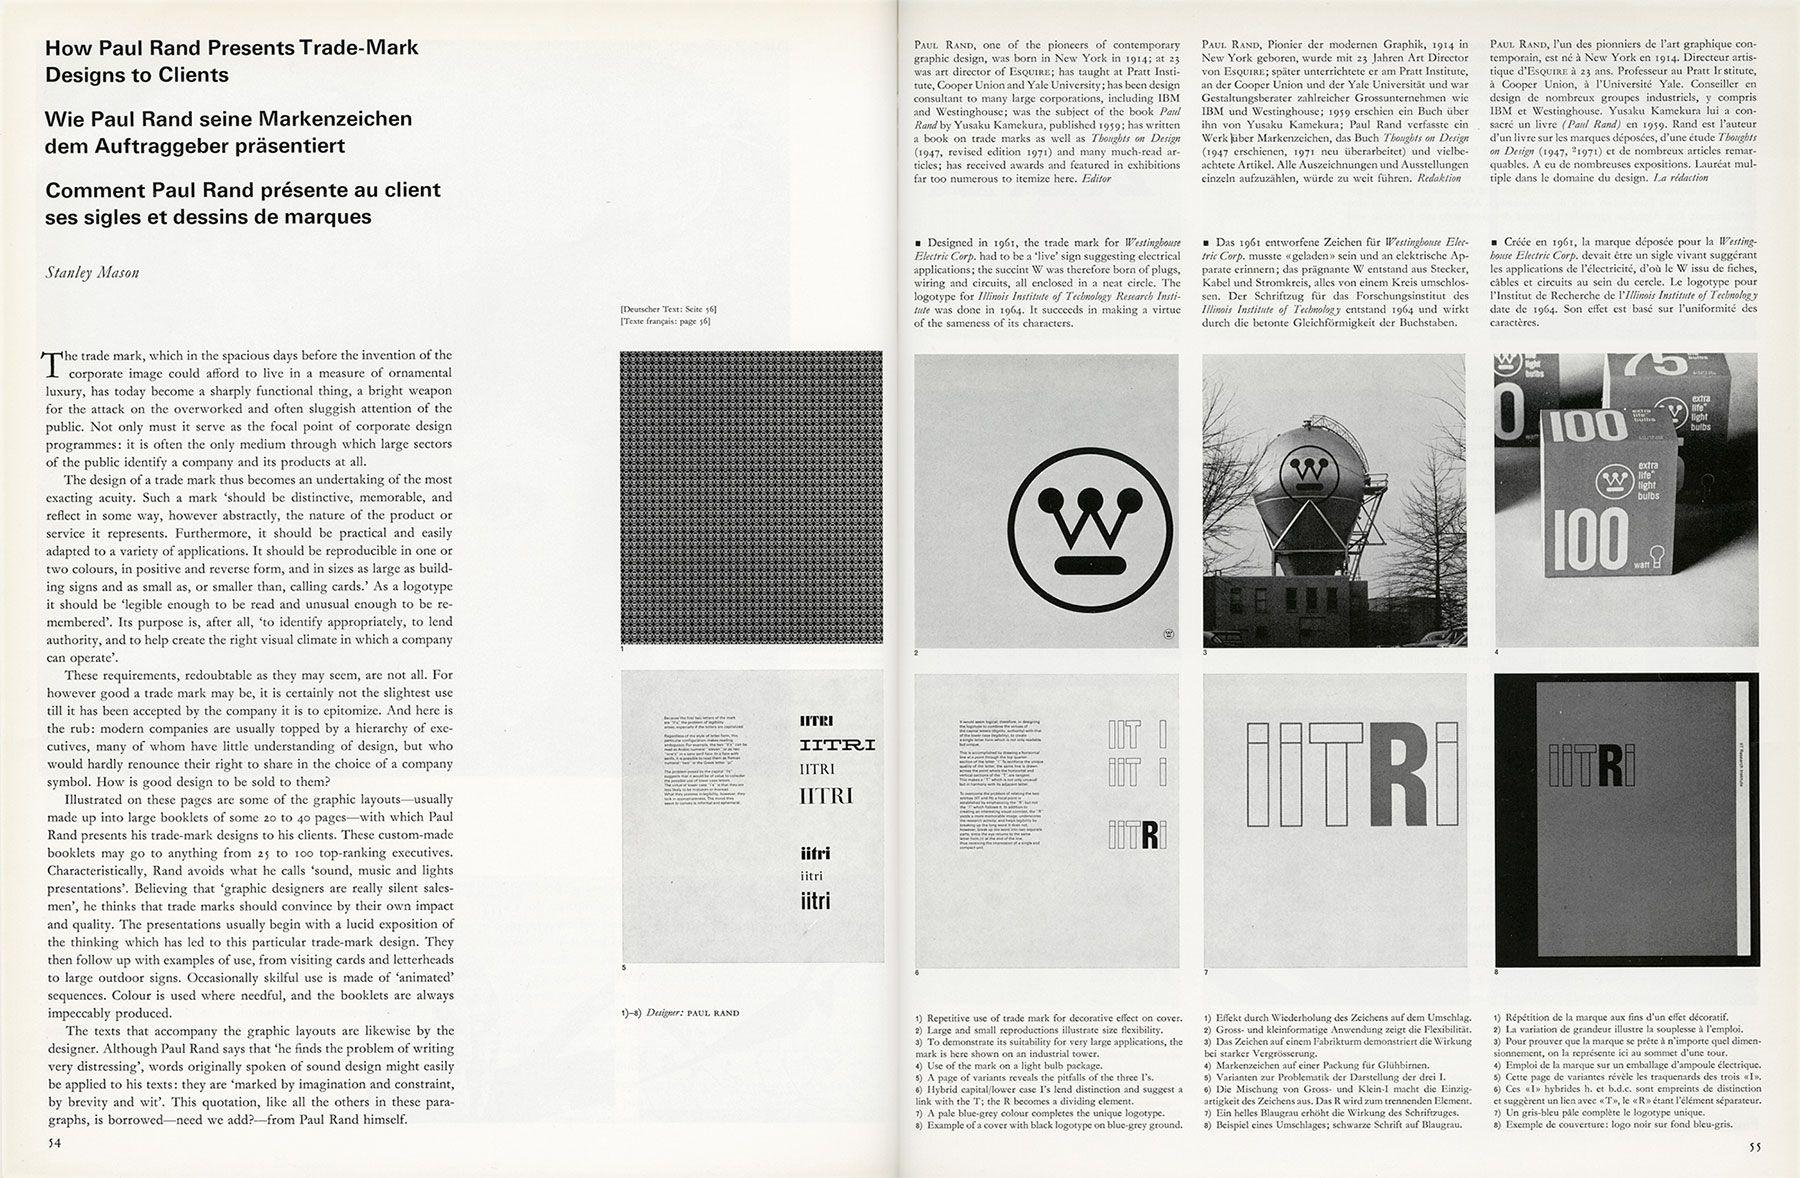 Von Logo - How Paul Rand presented logos to clients | Logo Design Love